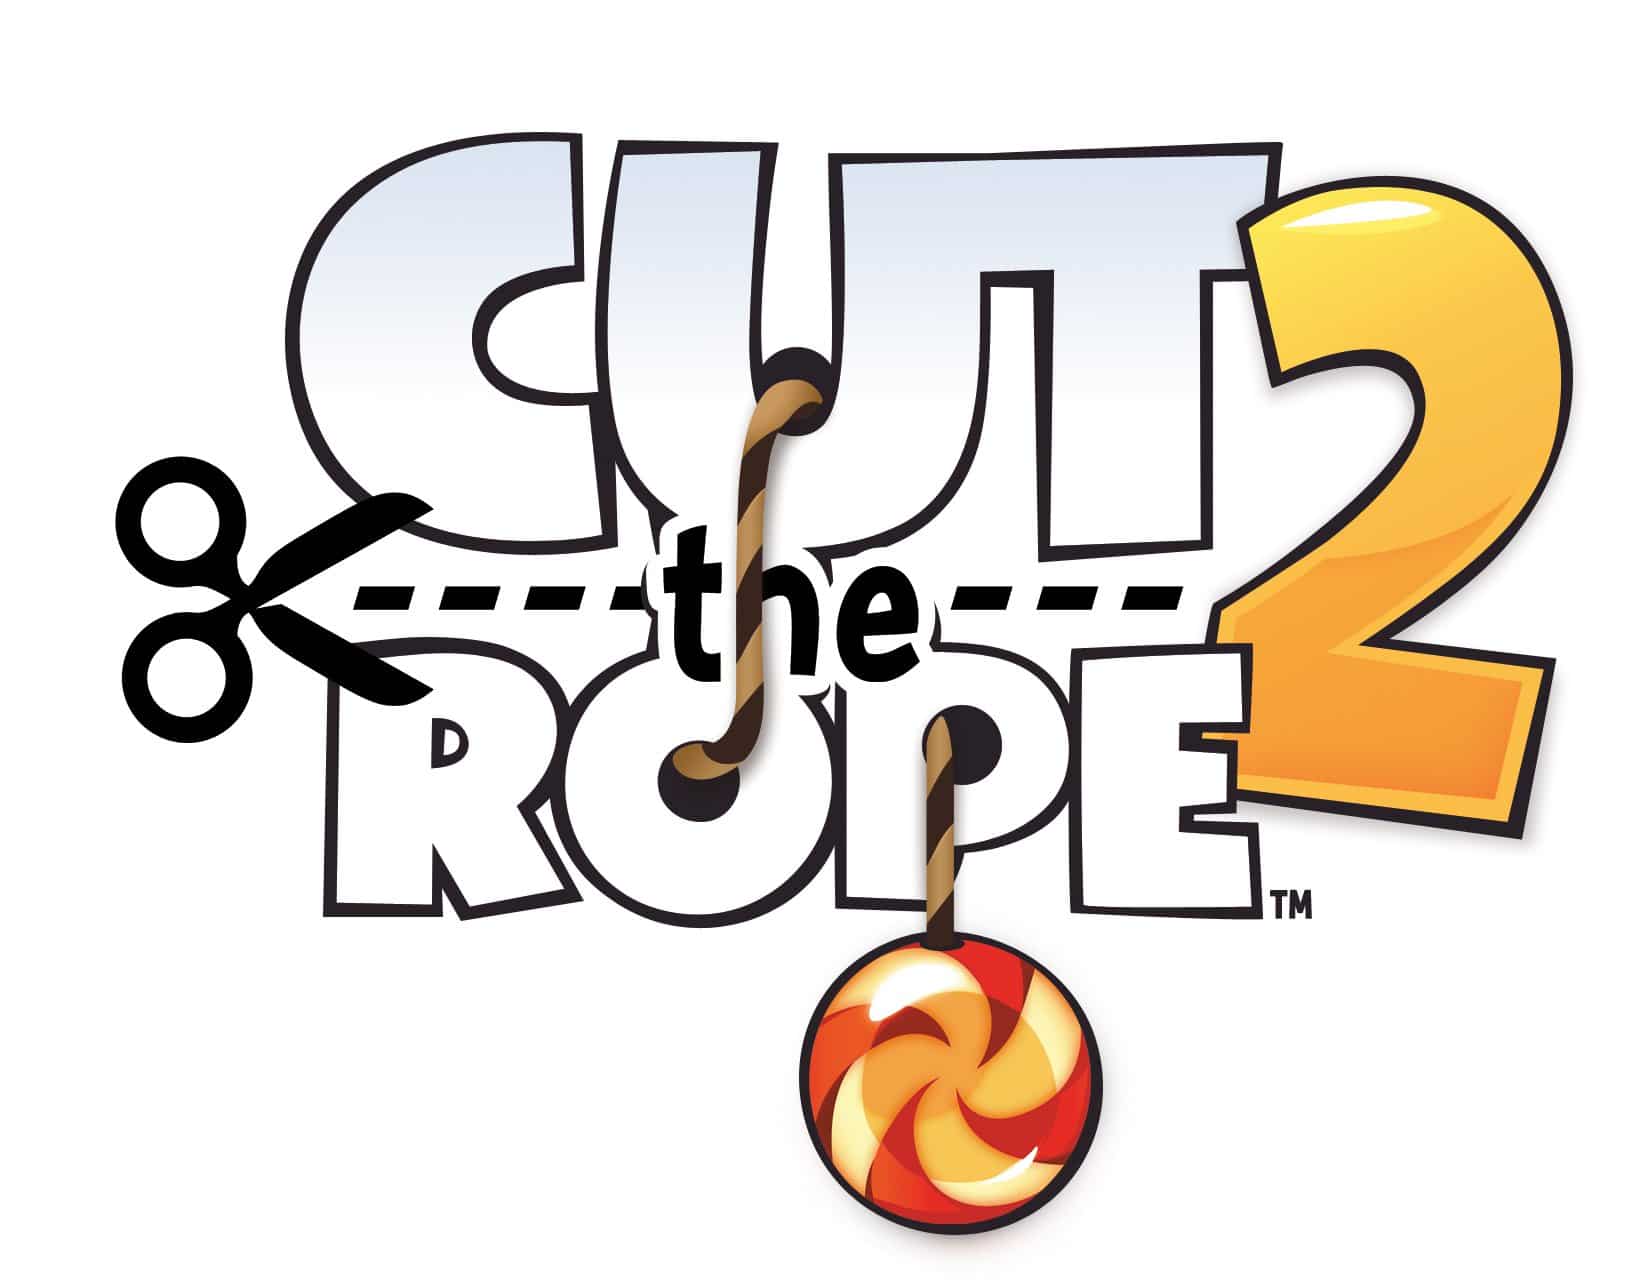 Cut-The-Rope-2-logo-001